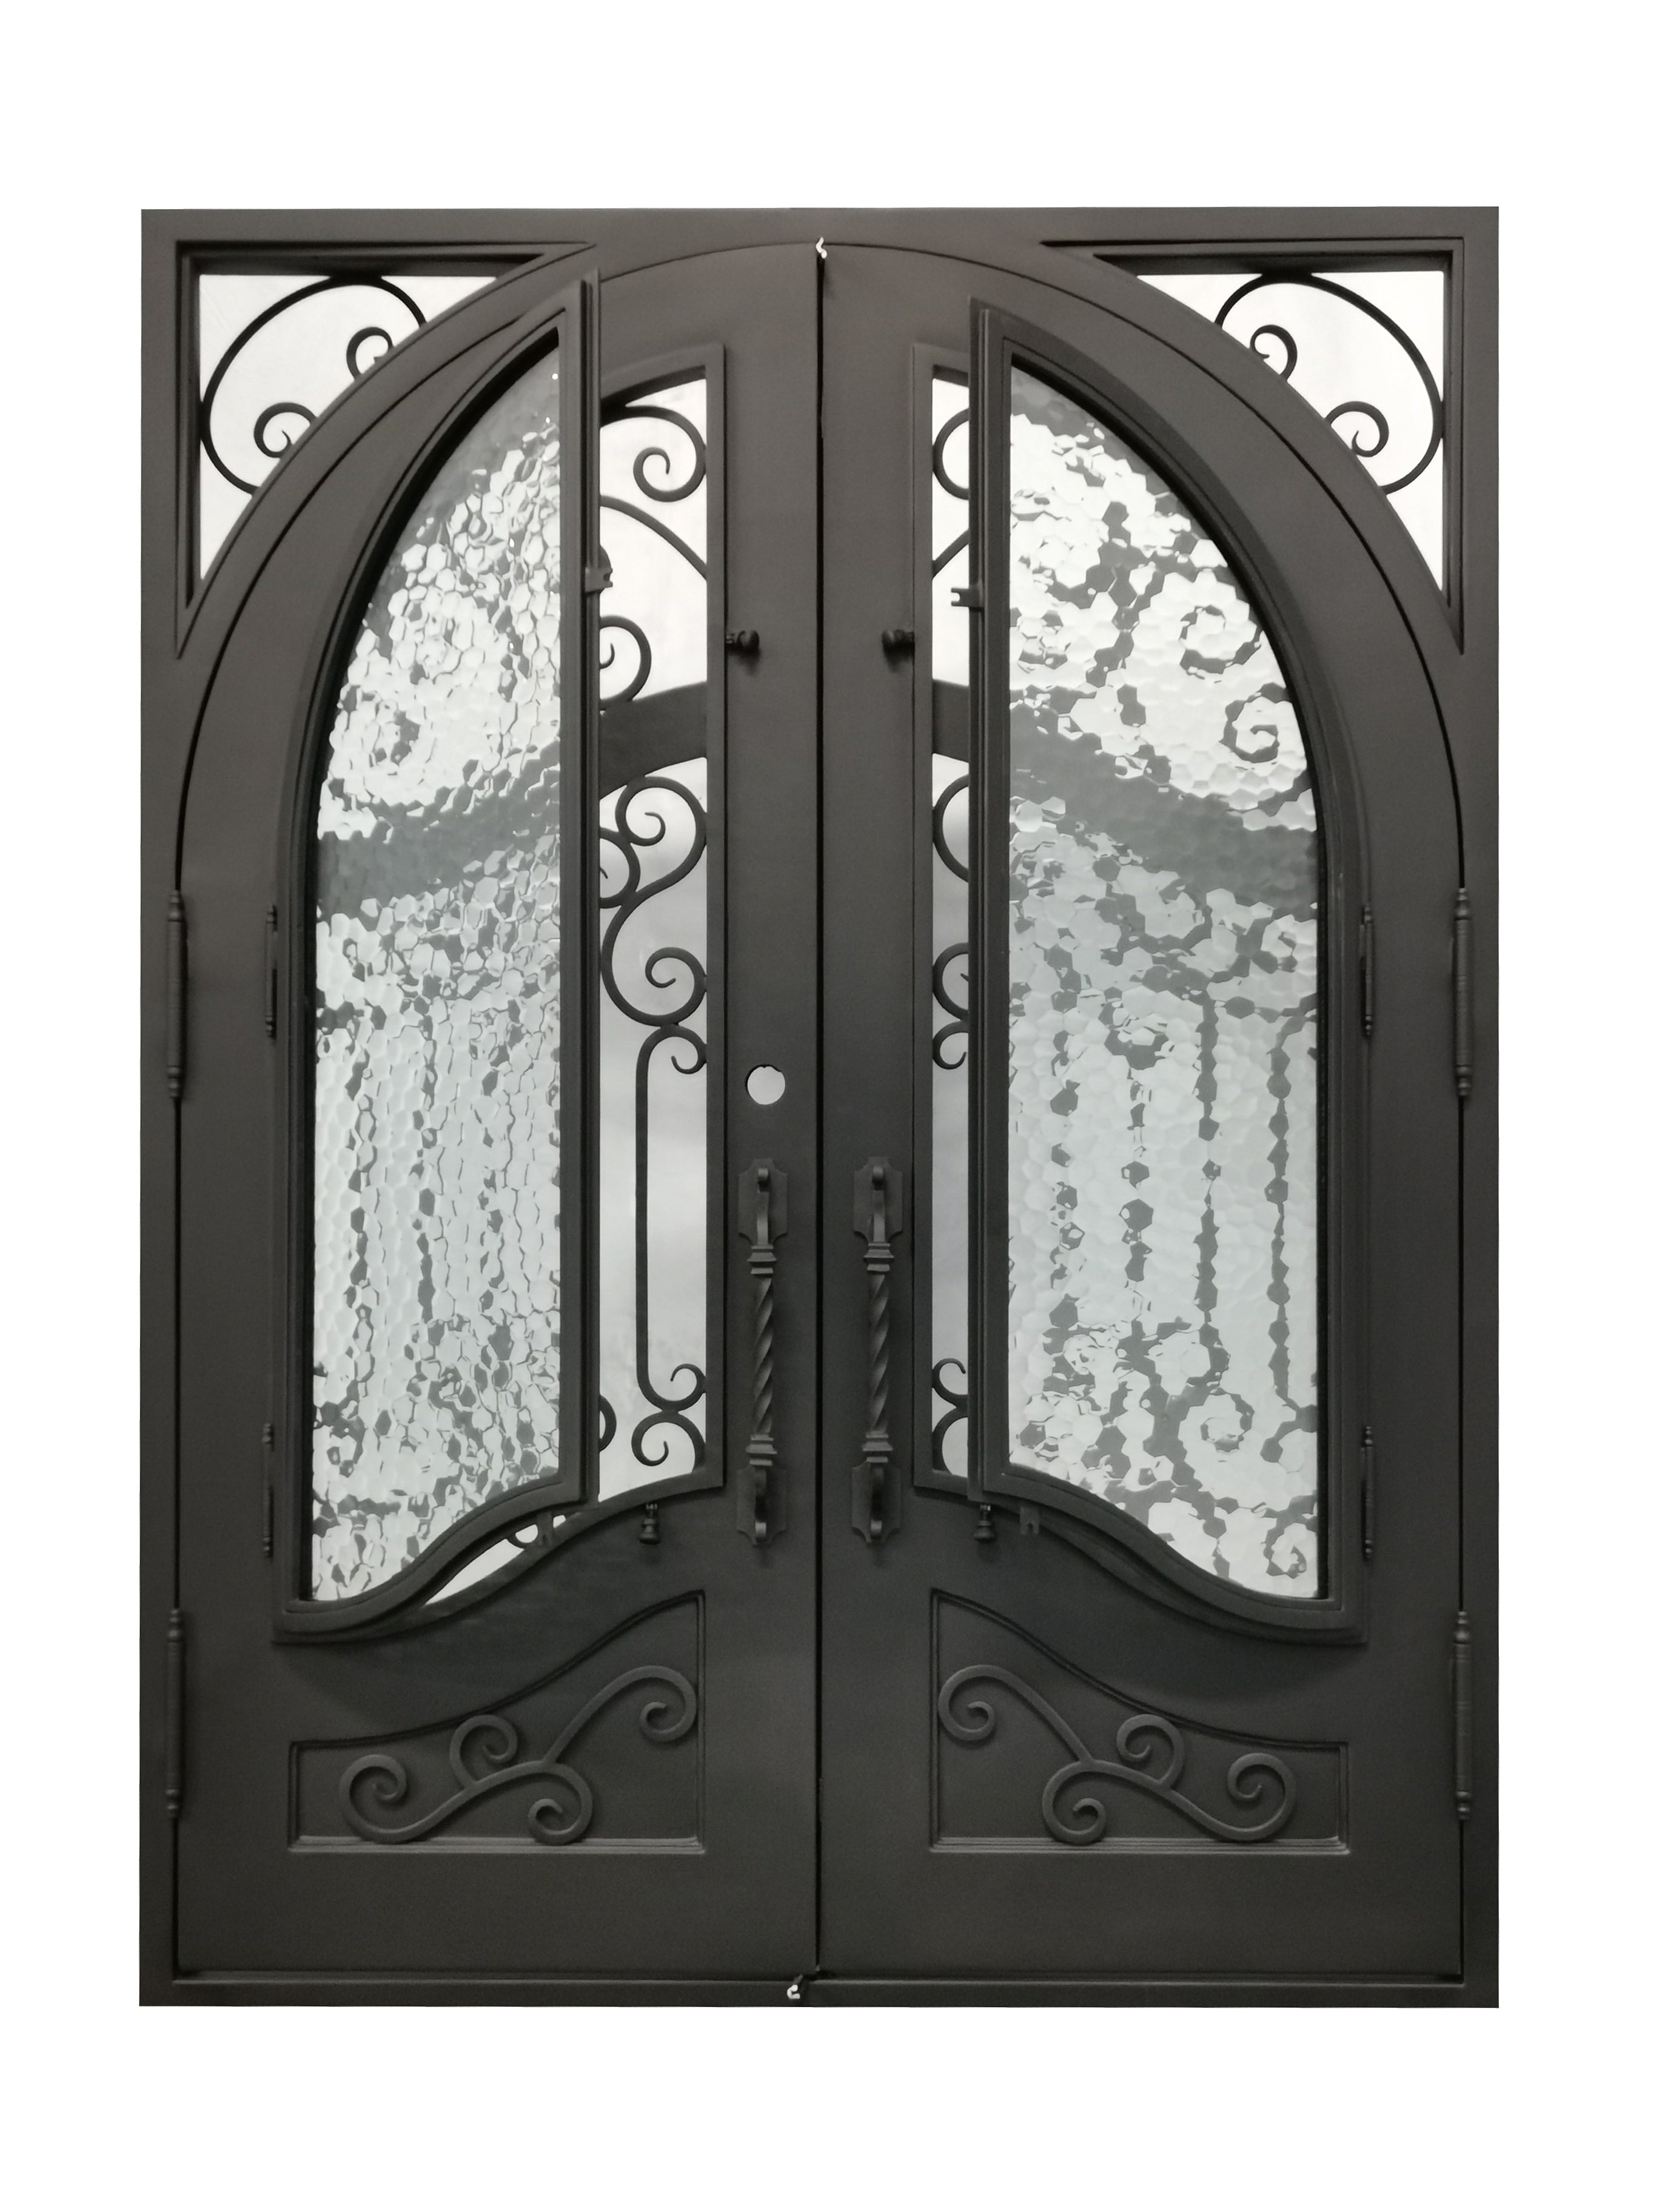 Calvert Model Double Front Entry Iron Door With Tempered Water Cube Glass Dark Bronze Finish